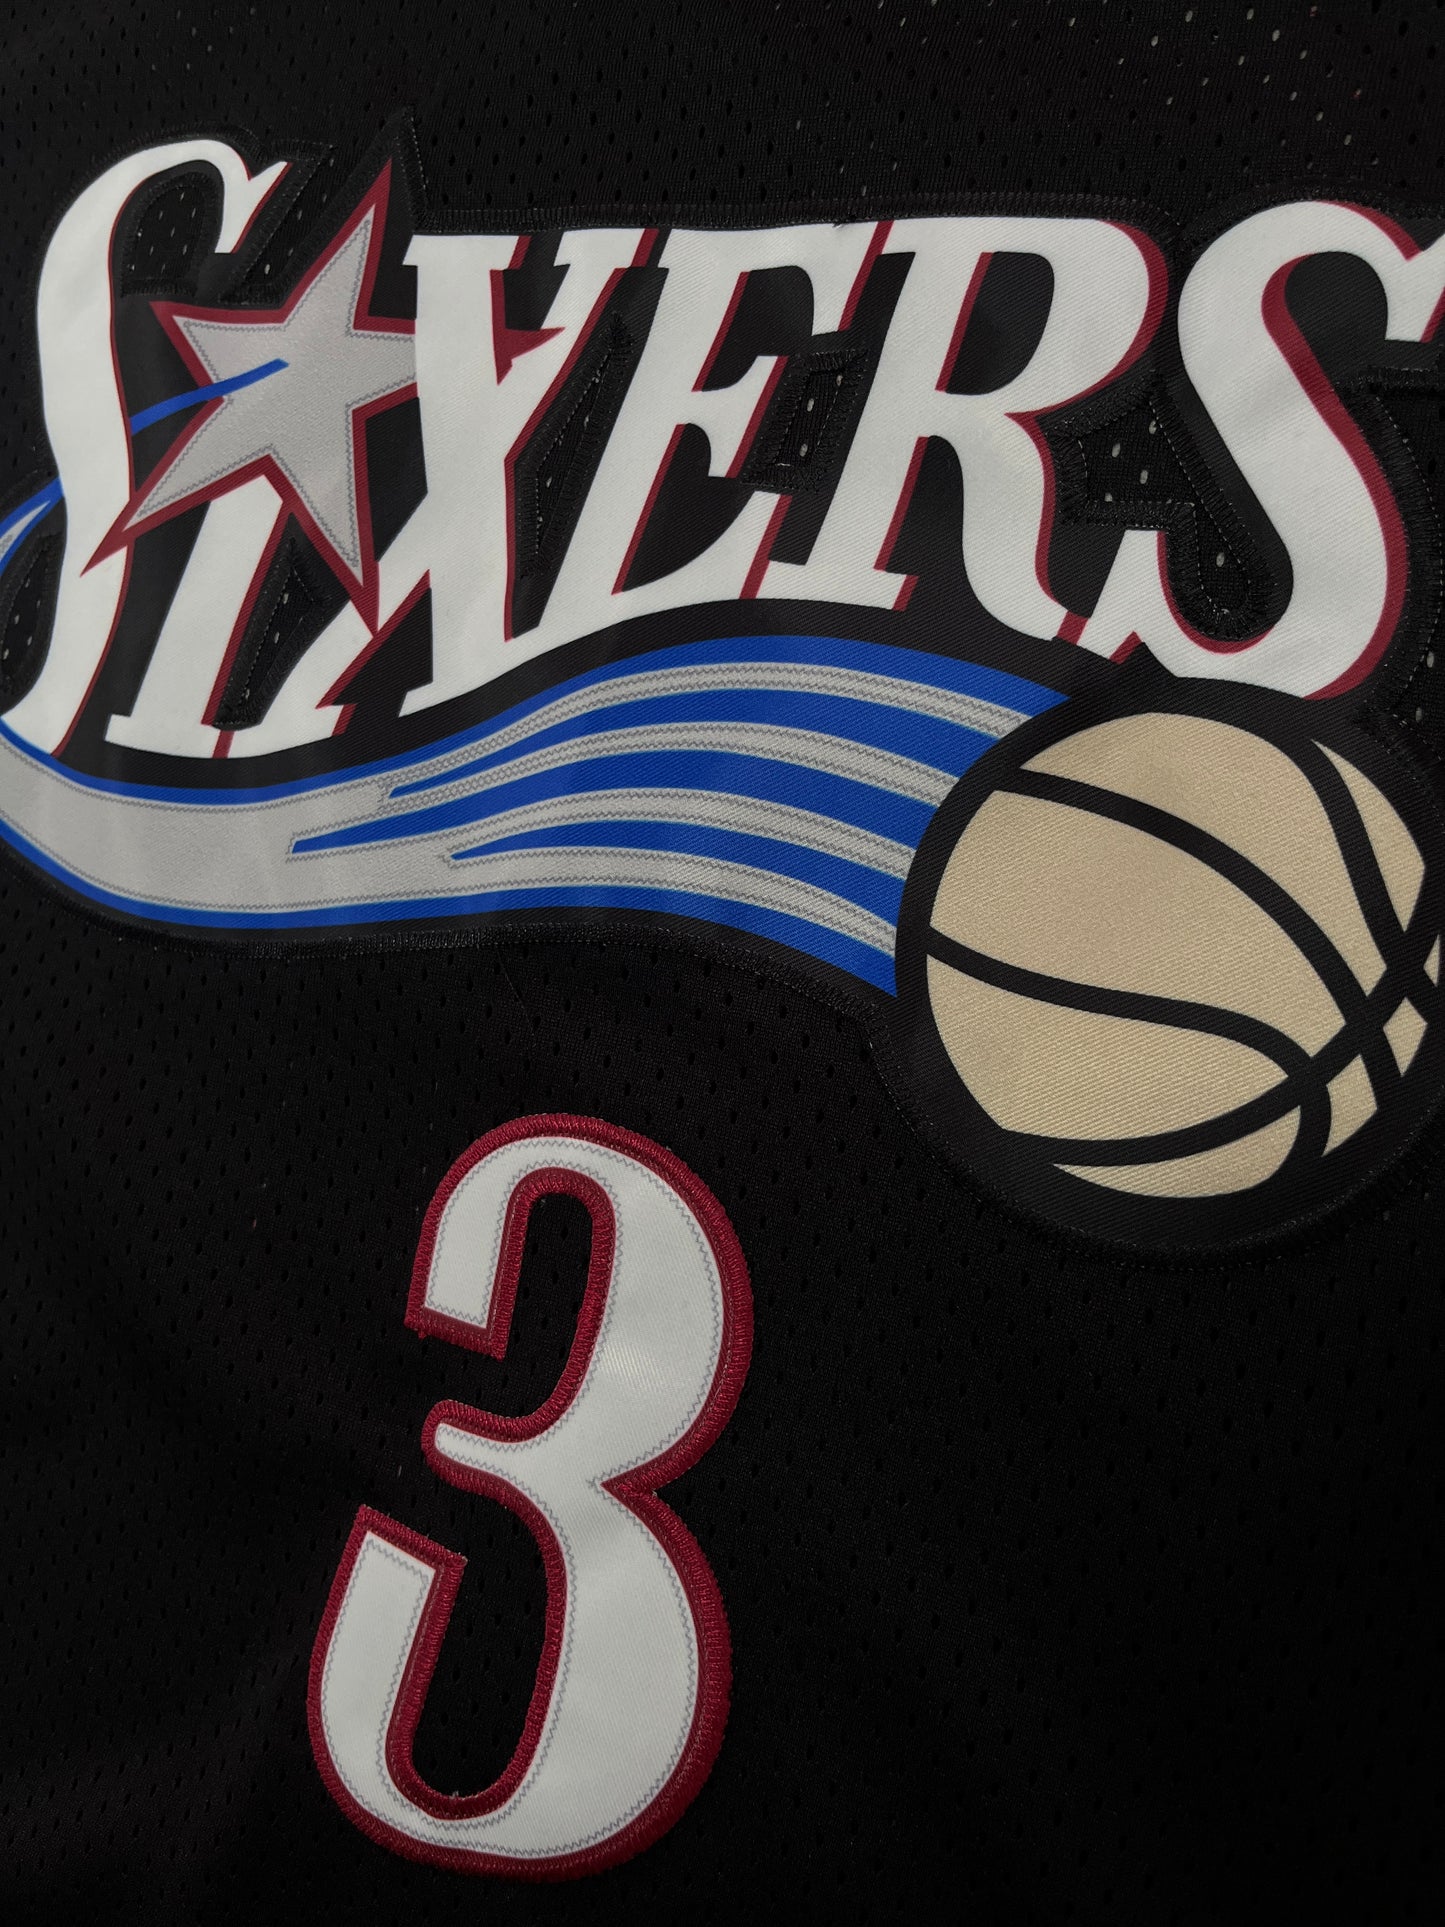 IVERSON 3 Black Adidas Philadelphia 76ers NBA Jersey